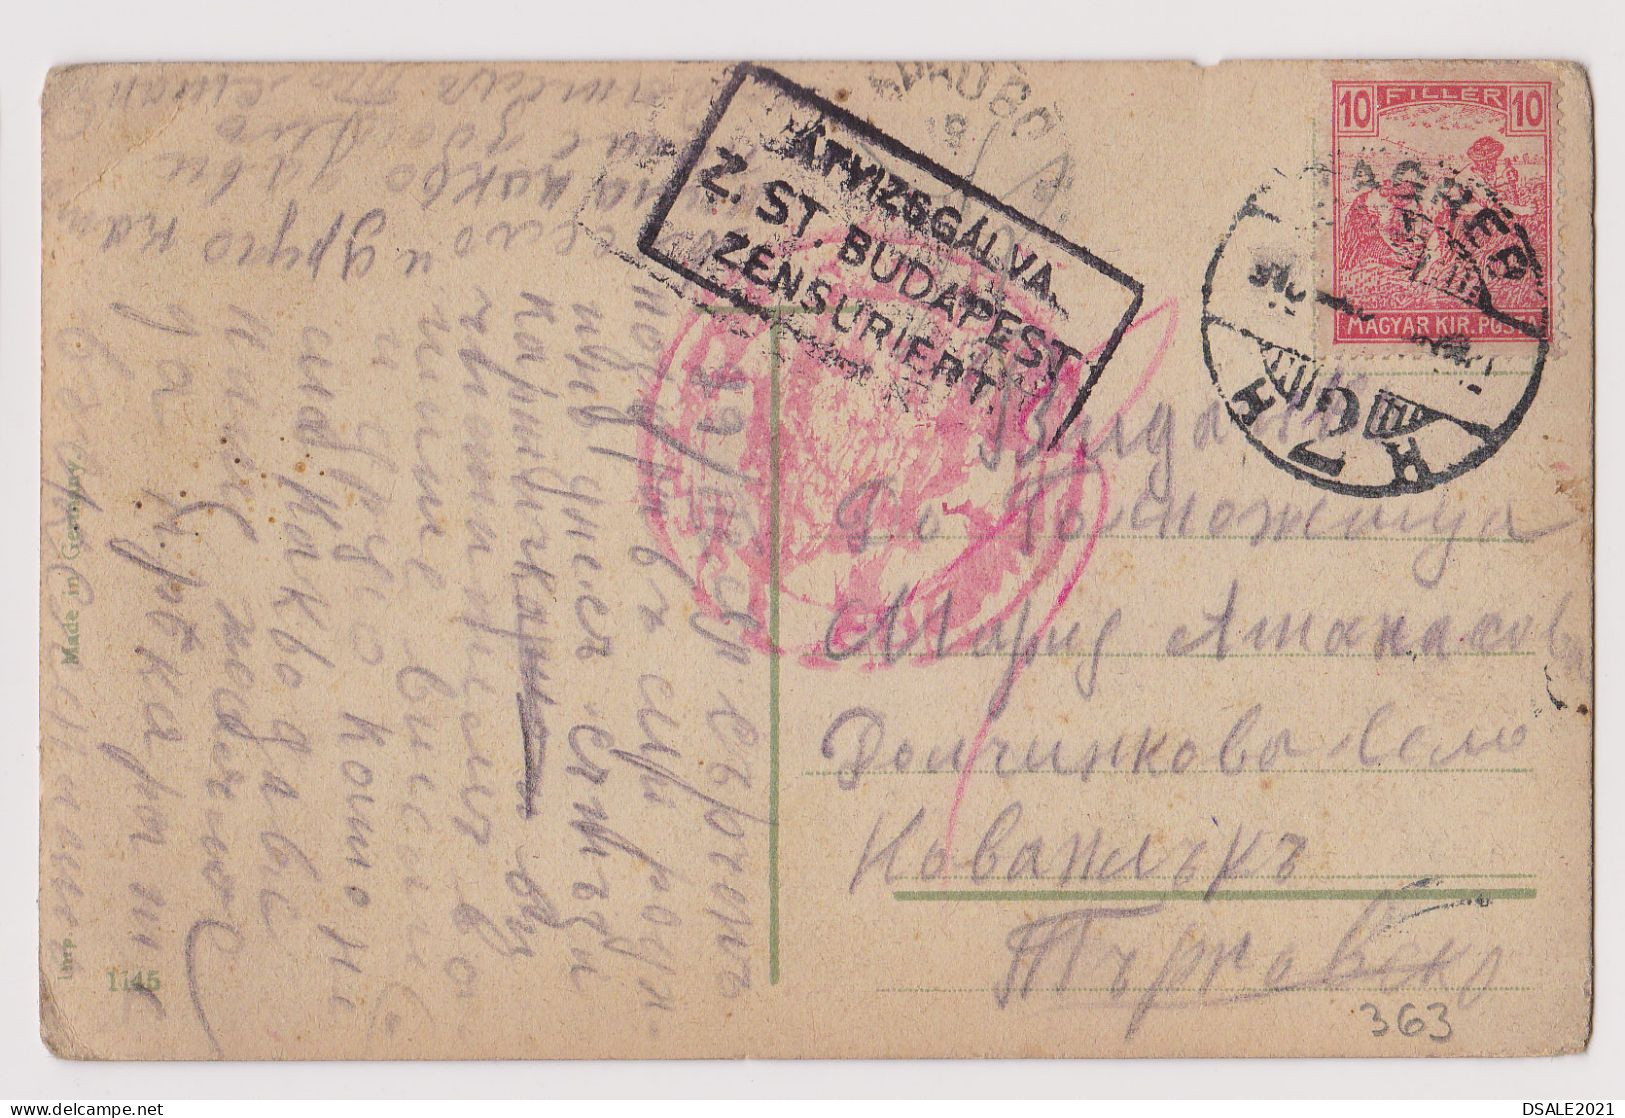 Hungary Croatia Ww1 Postcard Sent ZAGREB Censored BUDAPEST To Bulgaria Sofia Civil Censored Cachet (363) - Lettres & Documents